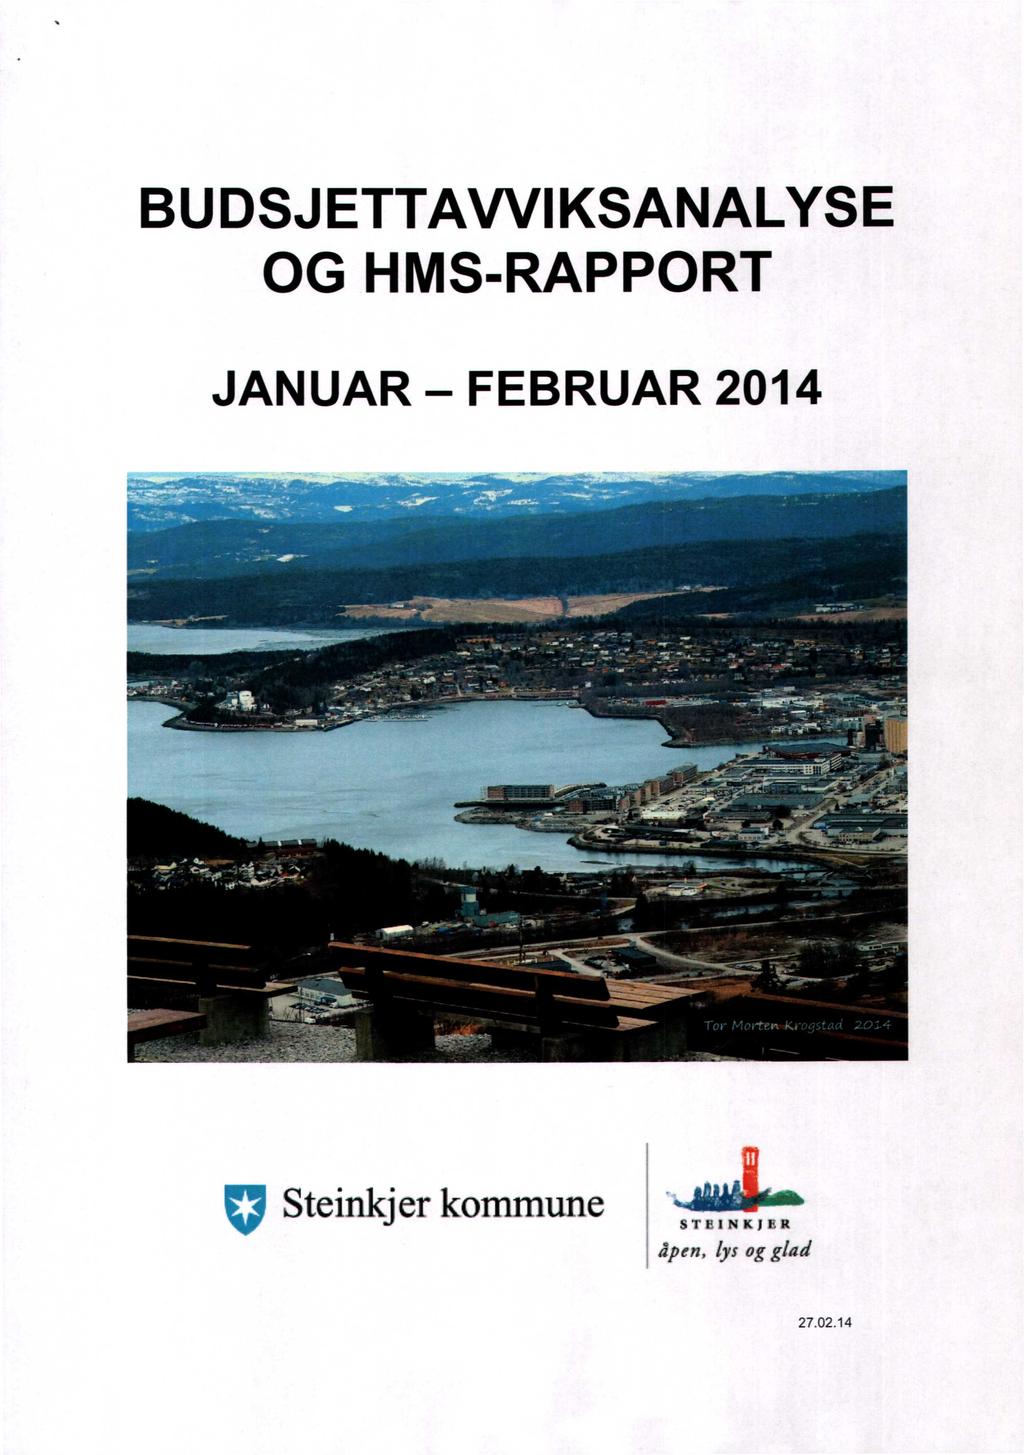 BUDSJETTAVVIKSANALYSE OG HMS-RAPPORT JANUAR FEBRUAR 2014